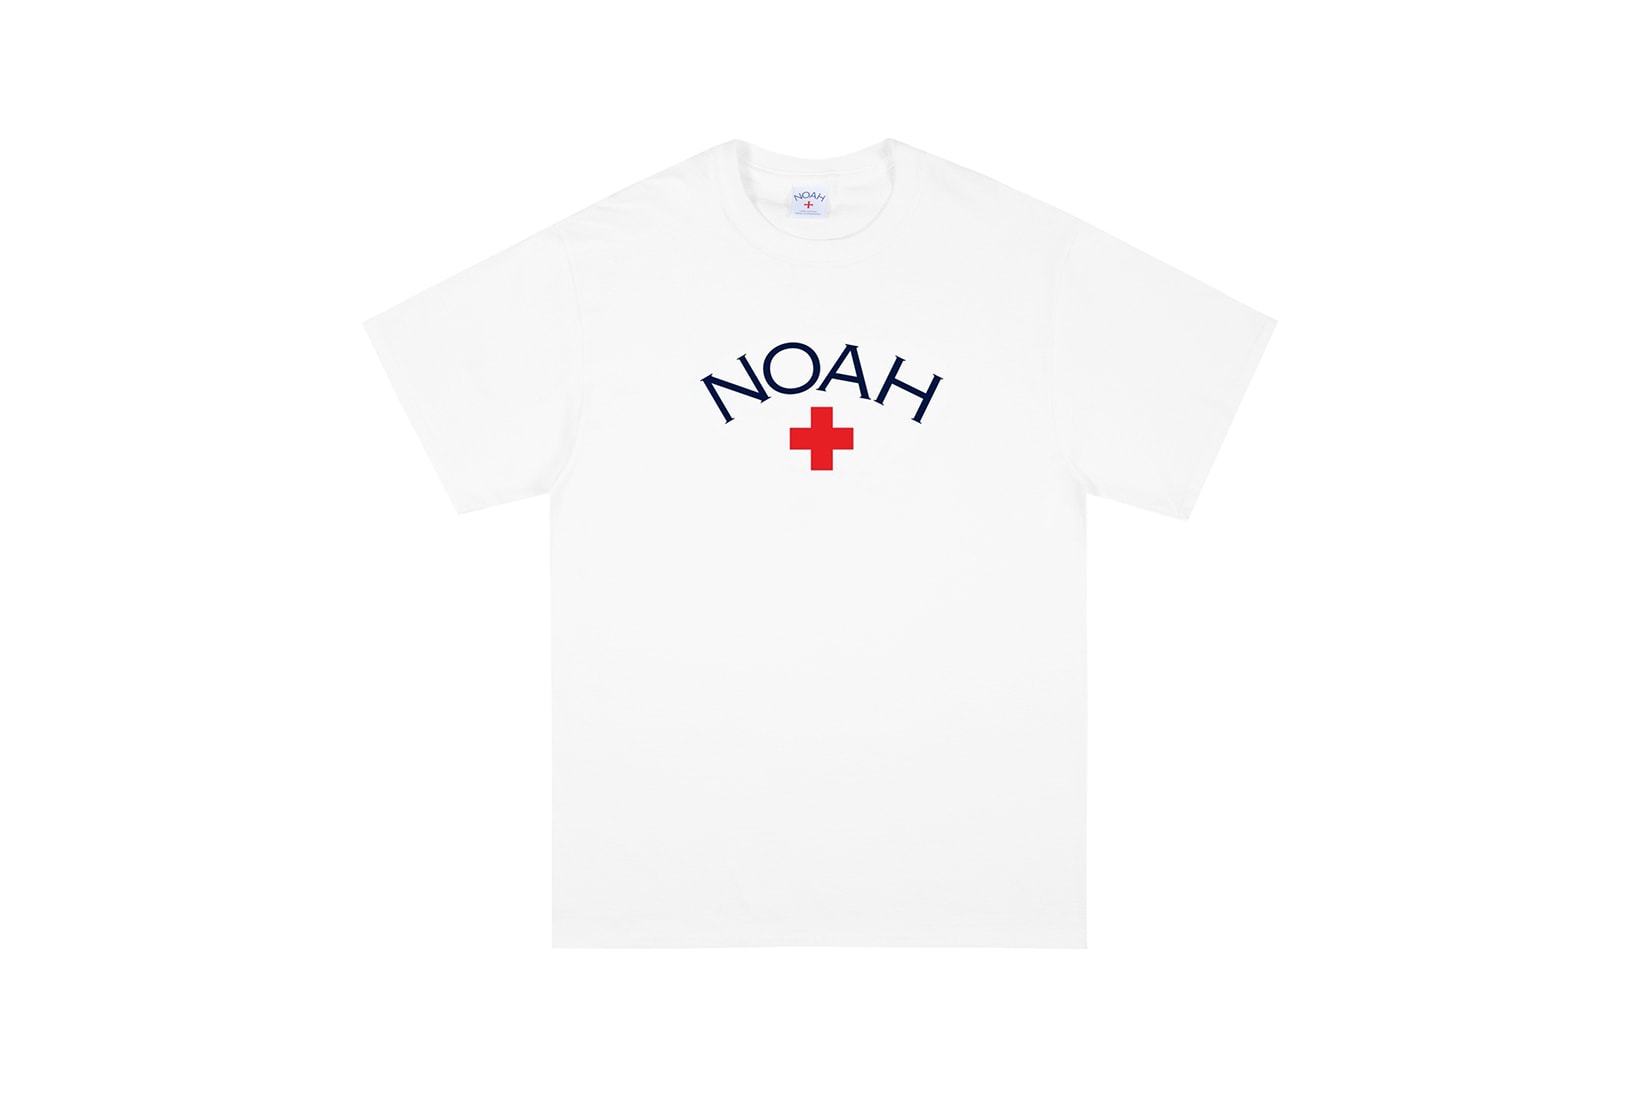 noah dover street market collaboration thank you core logo t shirt coronavirus covid 19 pandemic relief donation charity